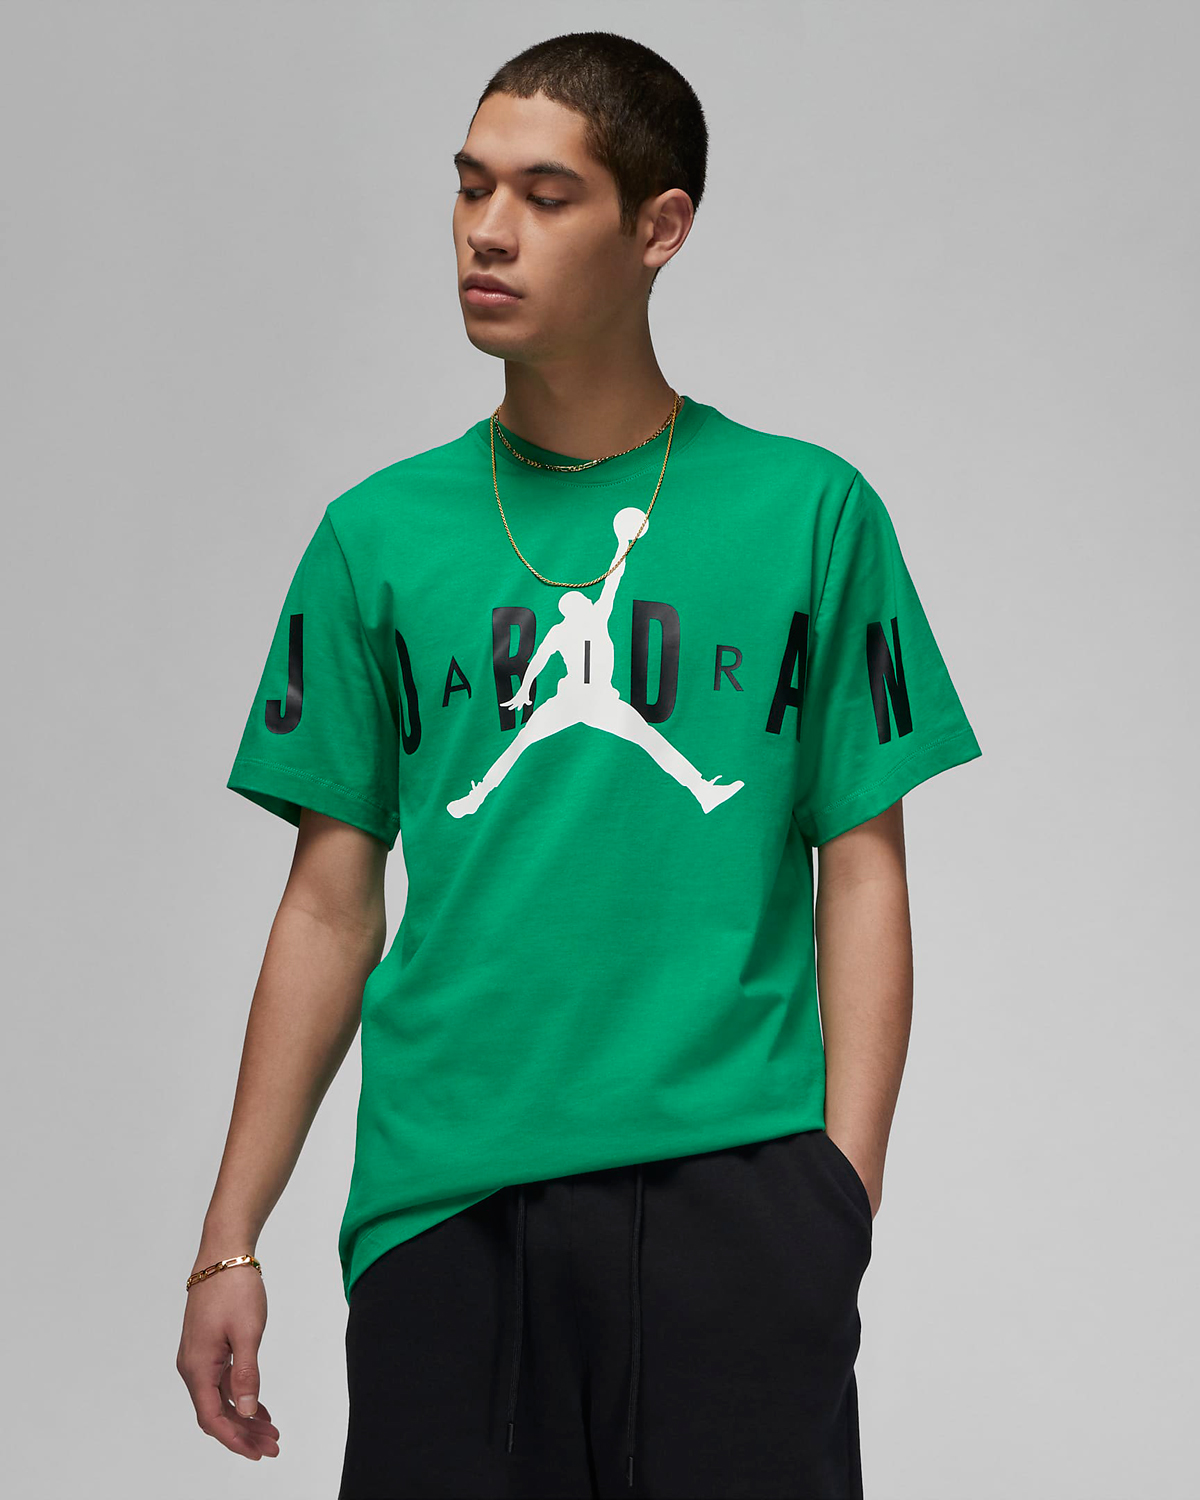 Nike SB Air Jordan 4 Pine Green Shirts Hats Clothing Outfits